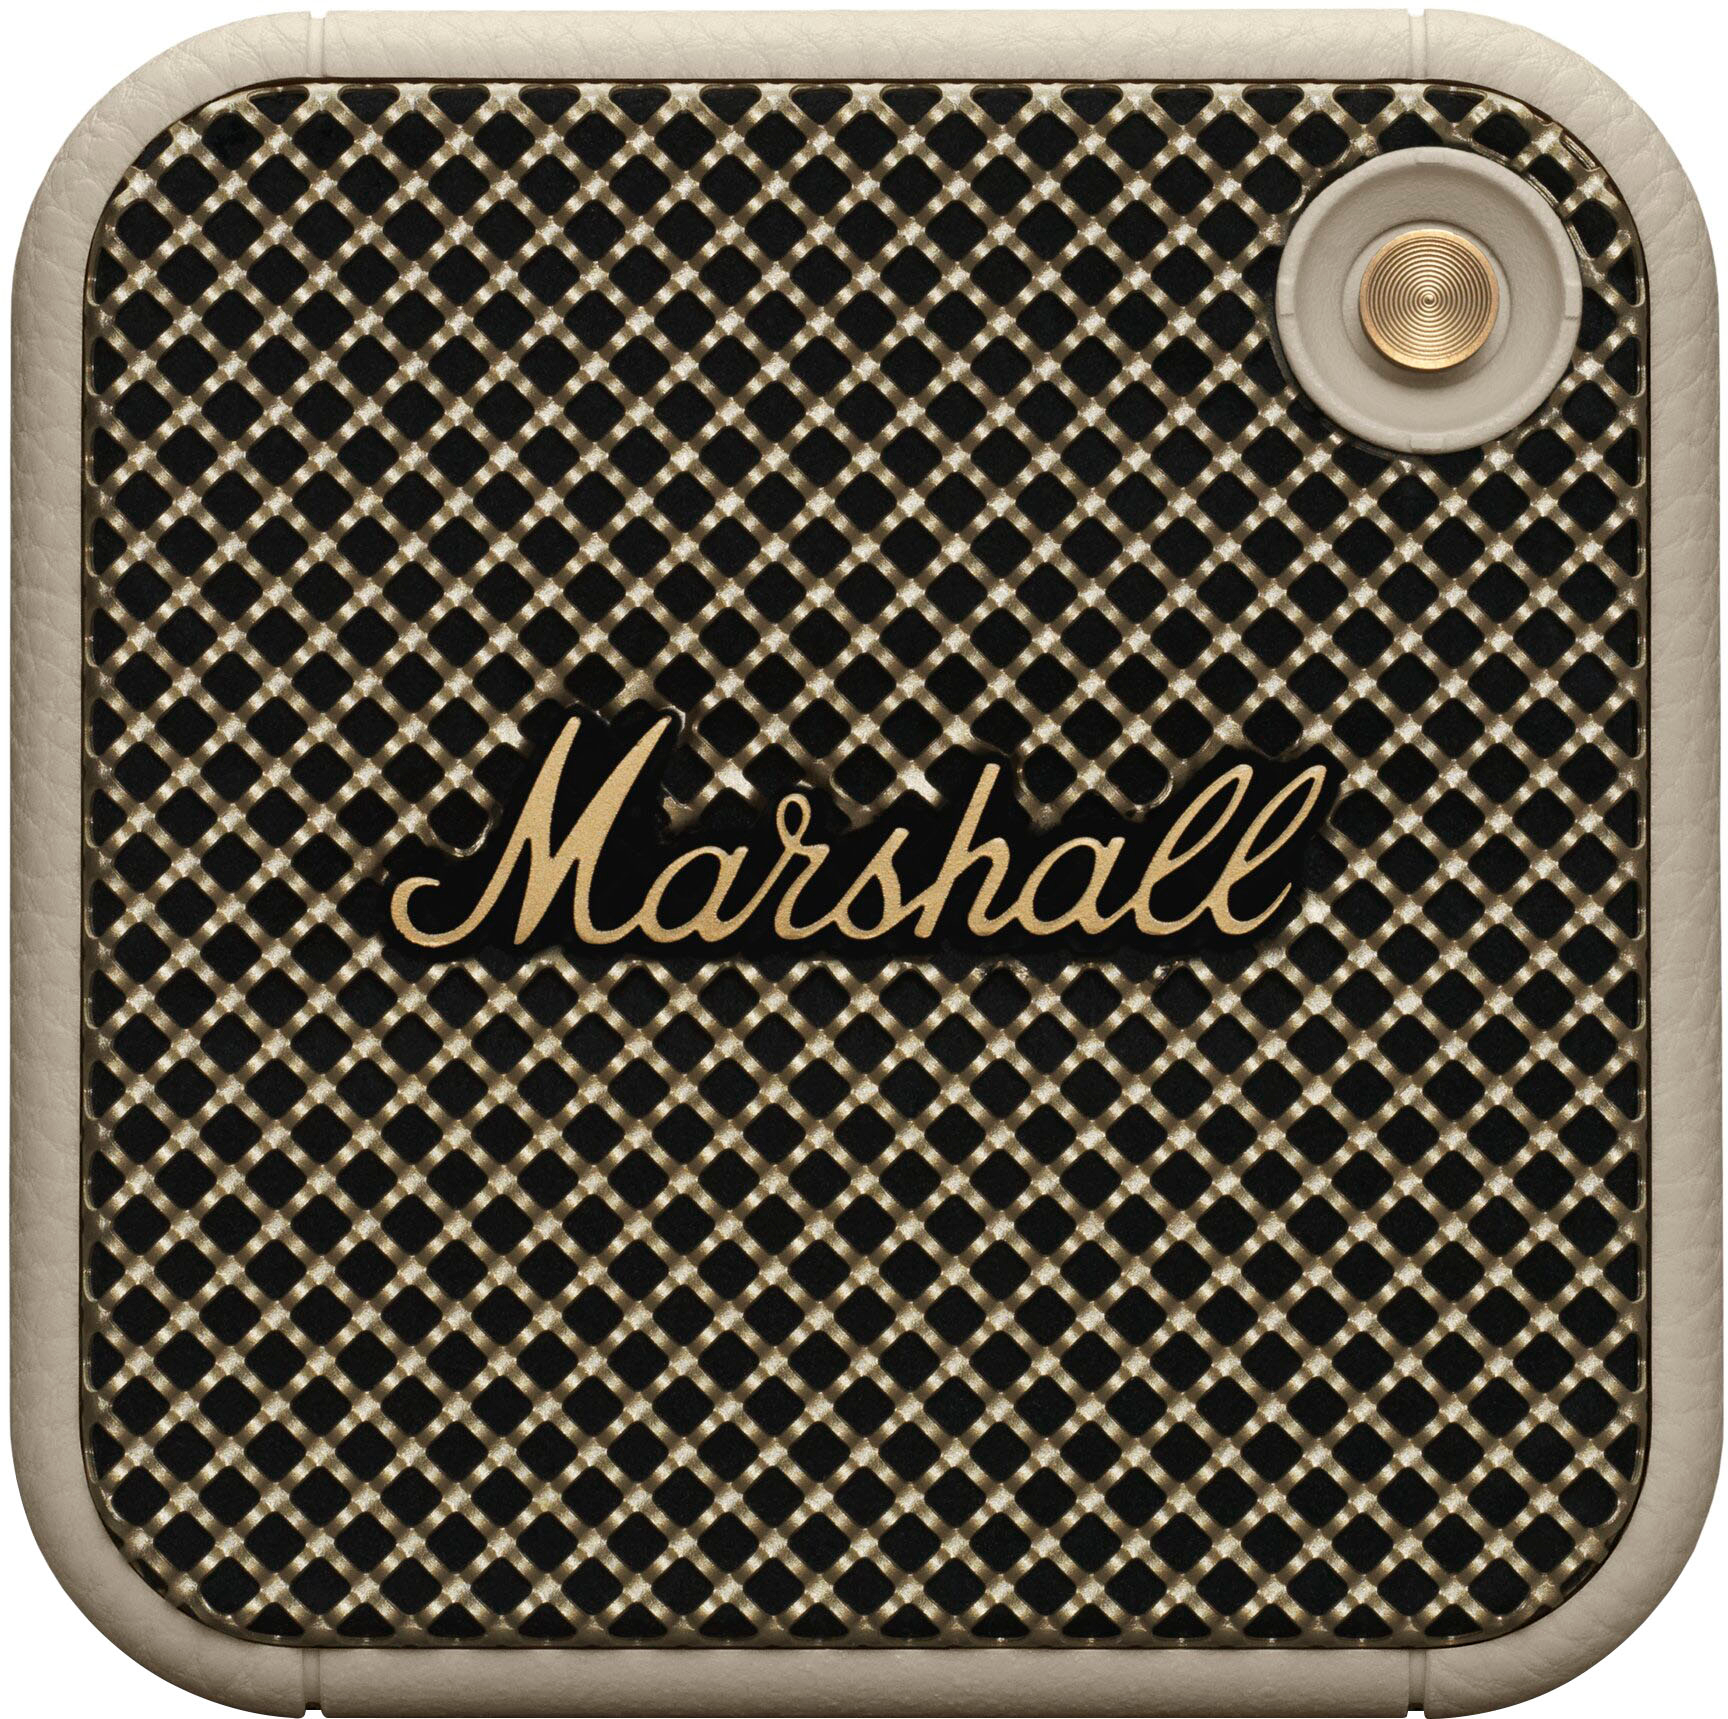 Marshall Best WILLEN Cream PORTABLE BLUETOOTH SPEAKER - Buy 1006294